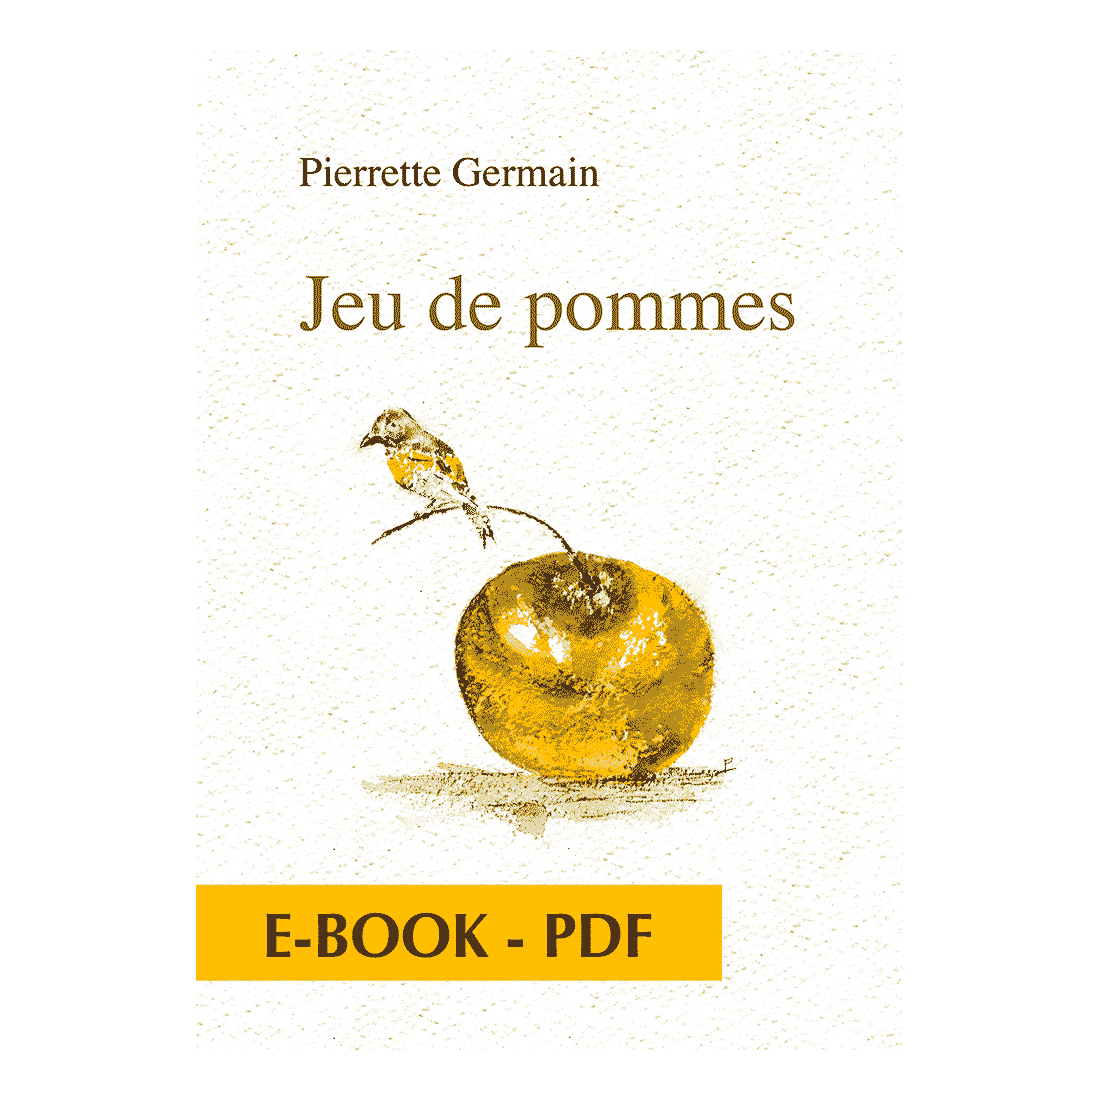 Jeu de pommes - E-book PDF